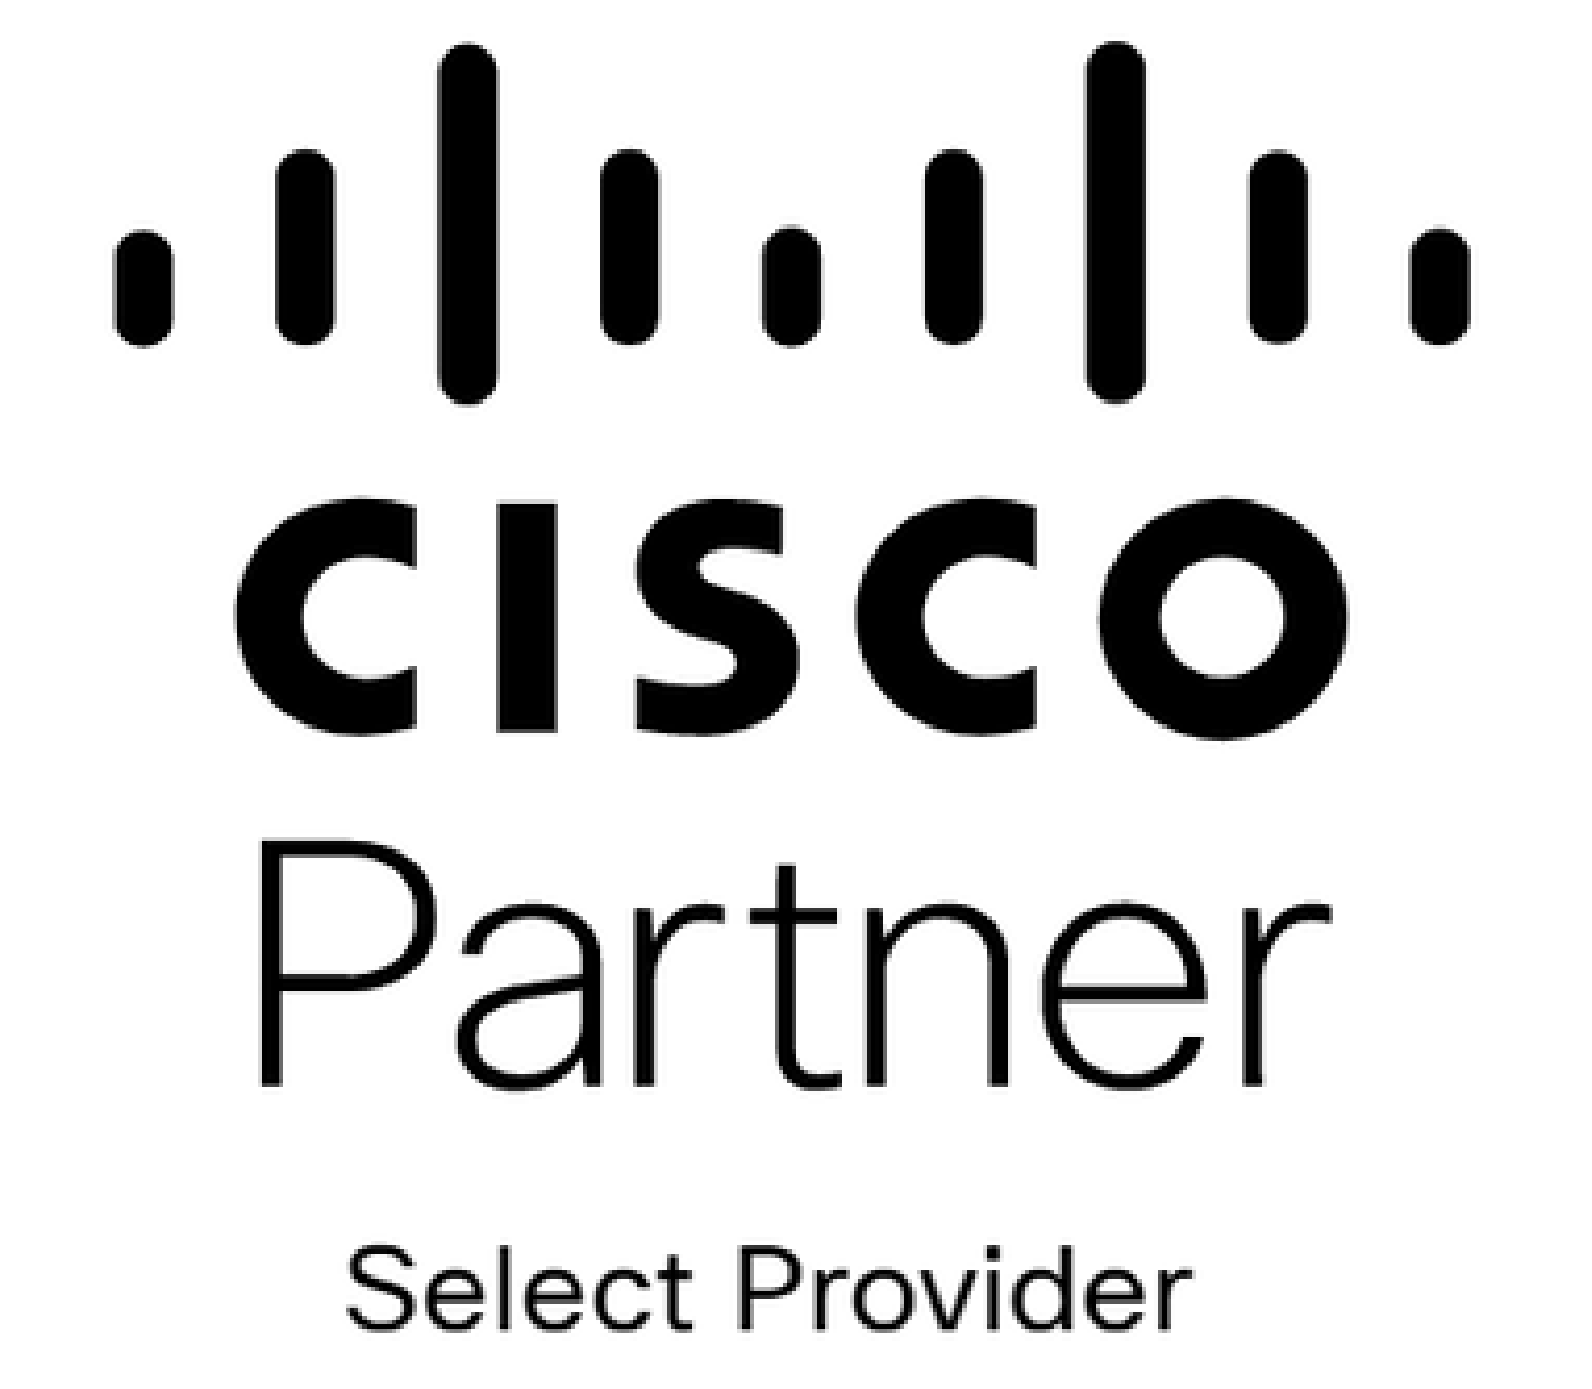 cisco partner-logo